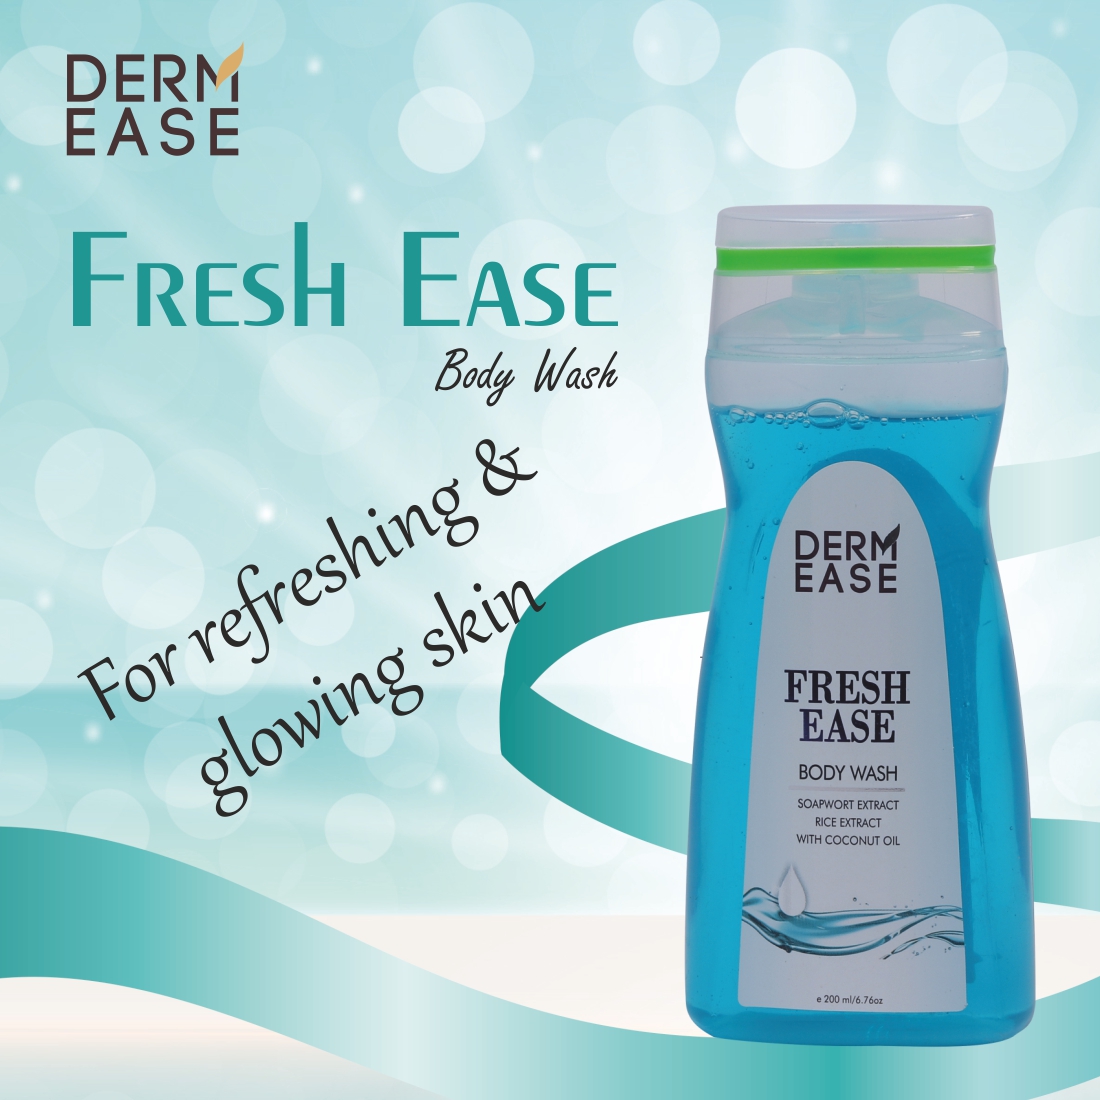 DERM EASE Fresh Ease Body Wash Combo